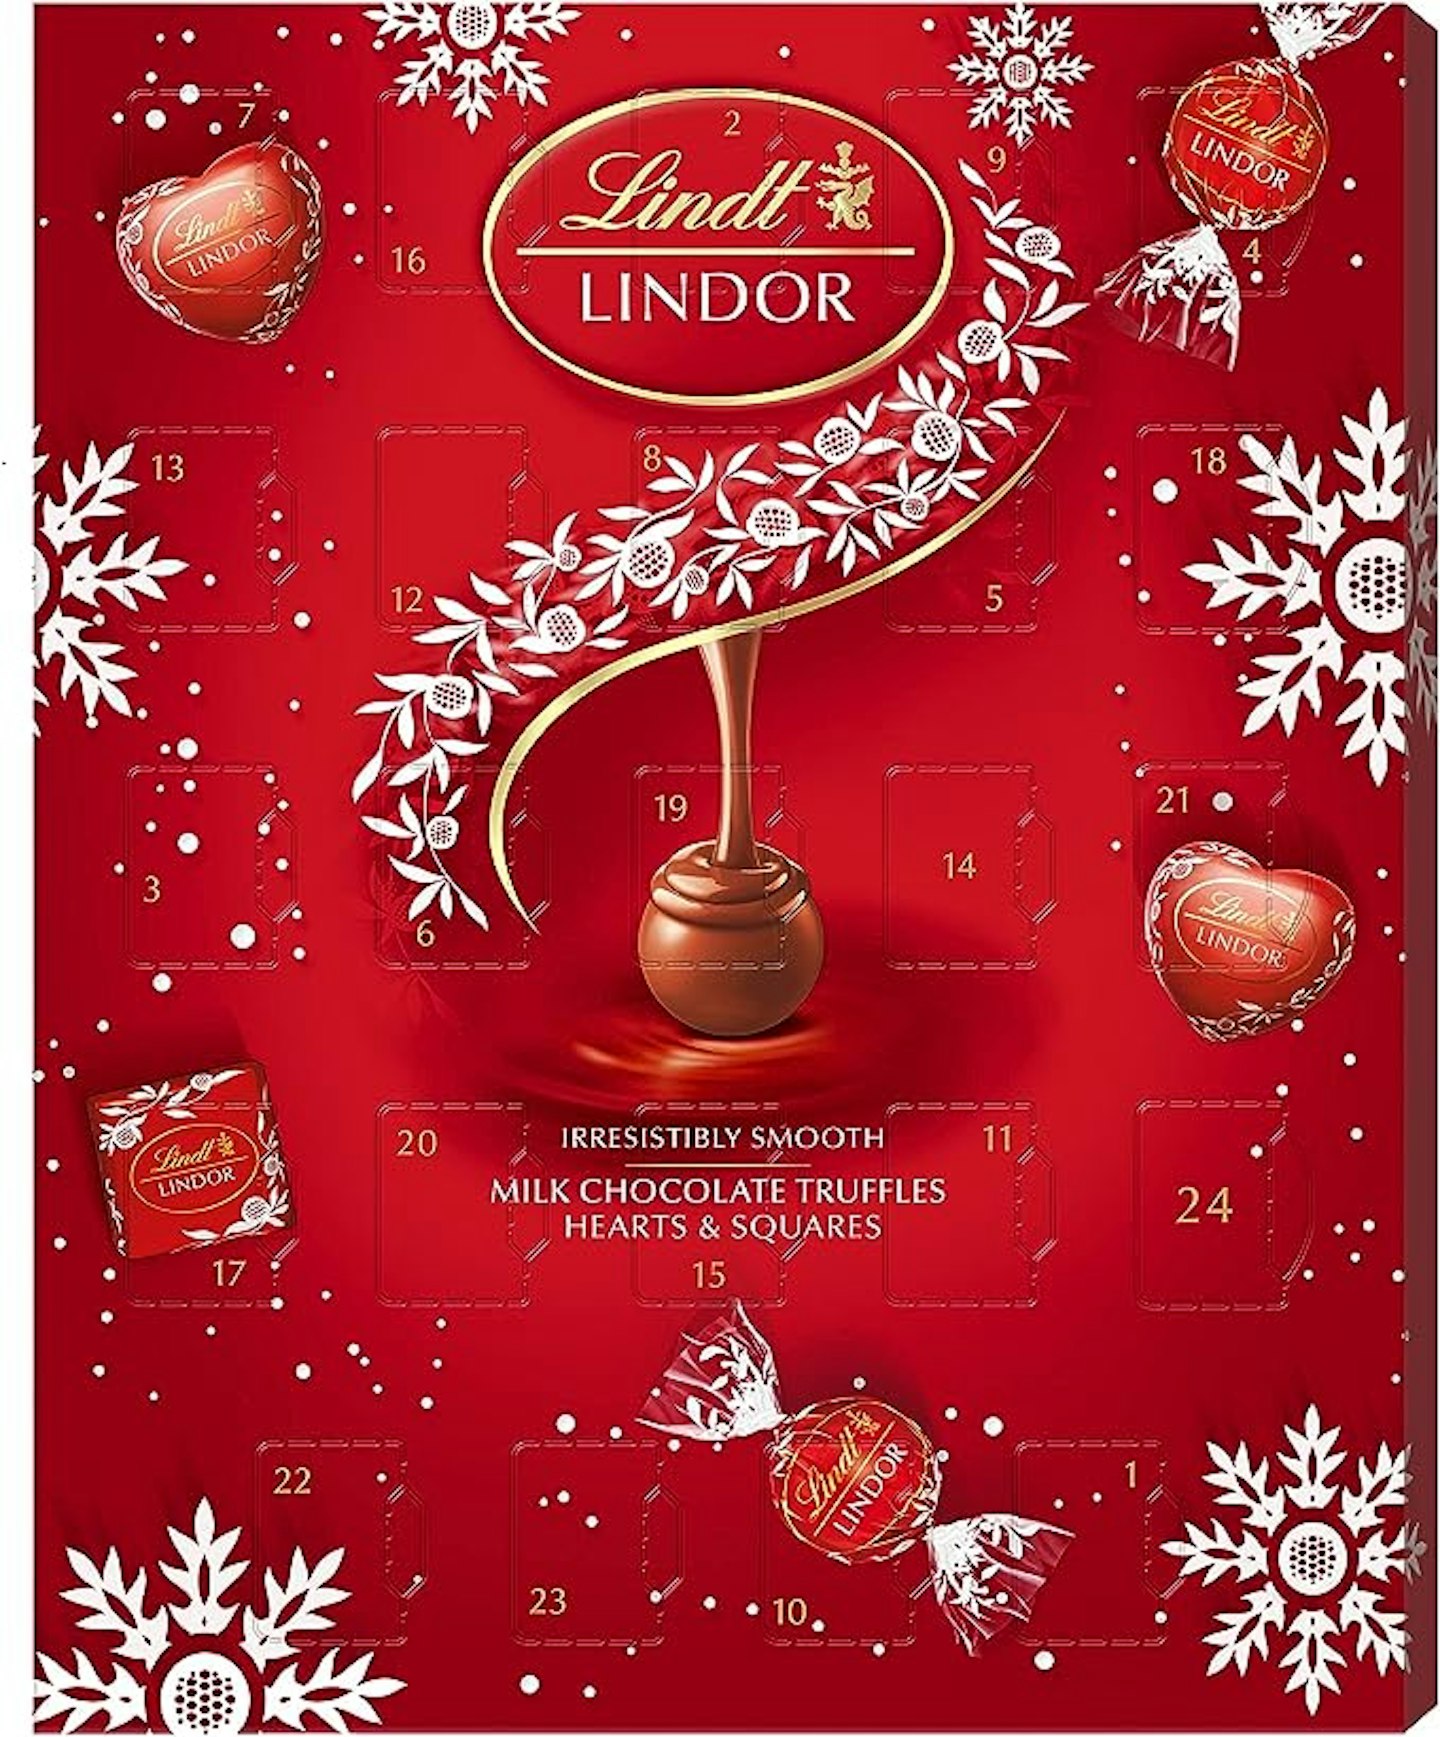 Lindt LINDOR - Adult advent calendar